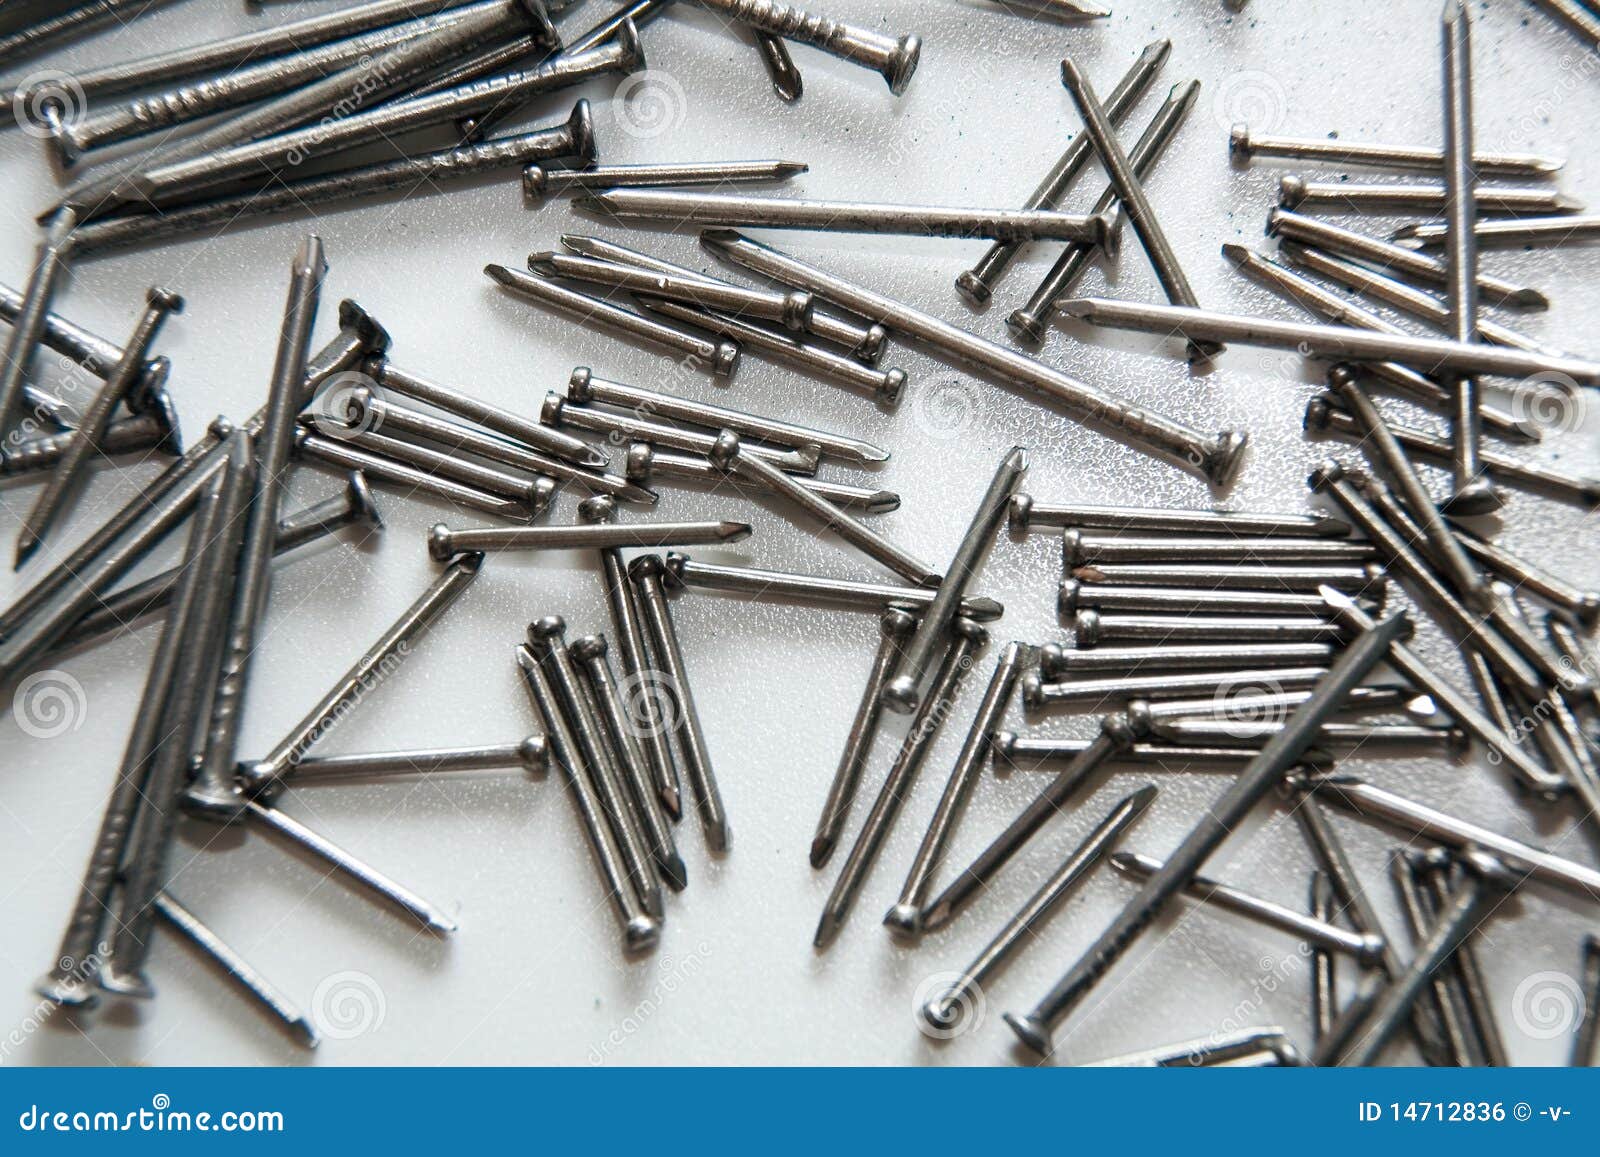 Steel nails stock photo. Image of home, pile, metallic - 14712836